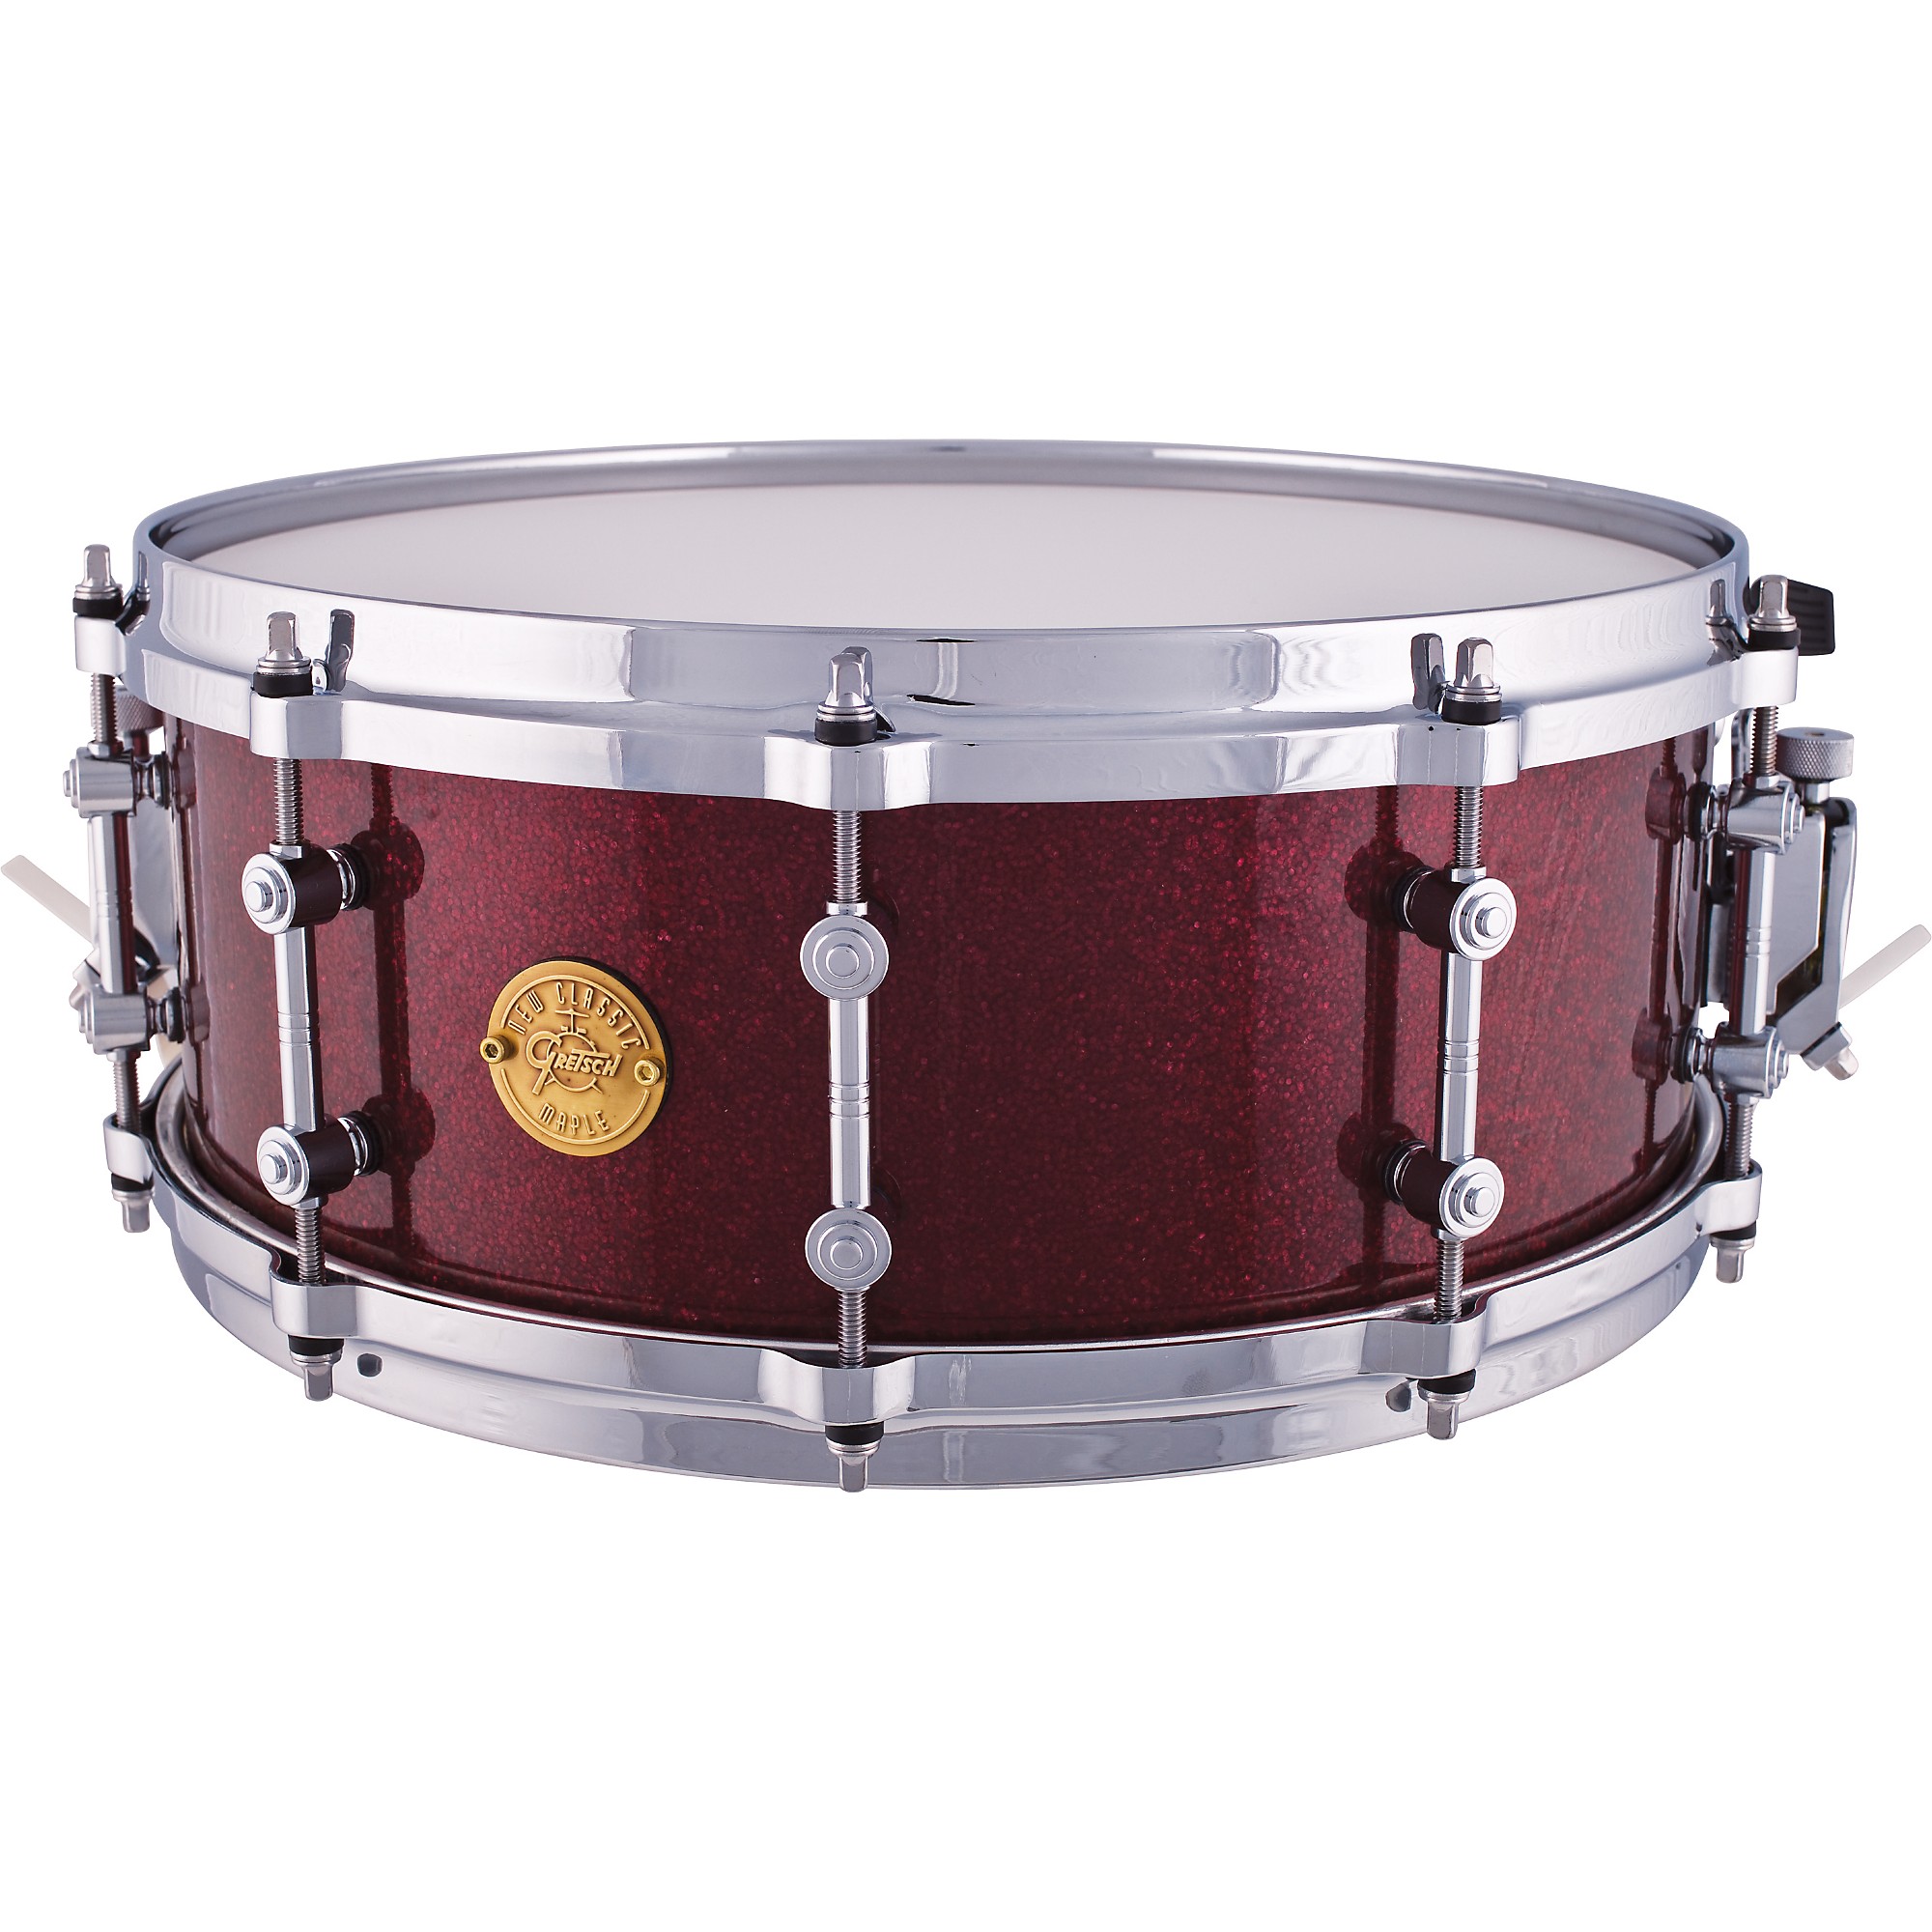 Gretsch Drums New Classic Snare Drum Merlot Sparkle 5.5x14